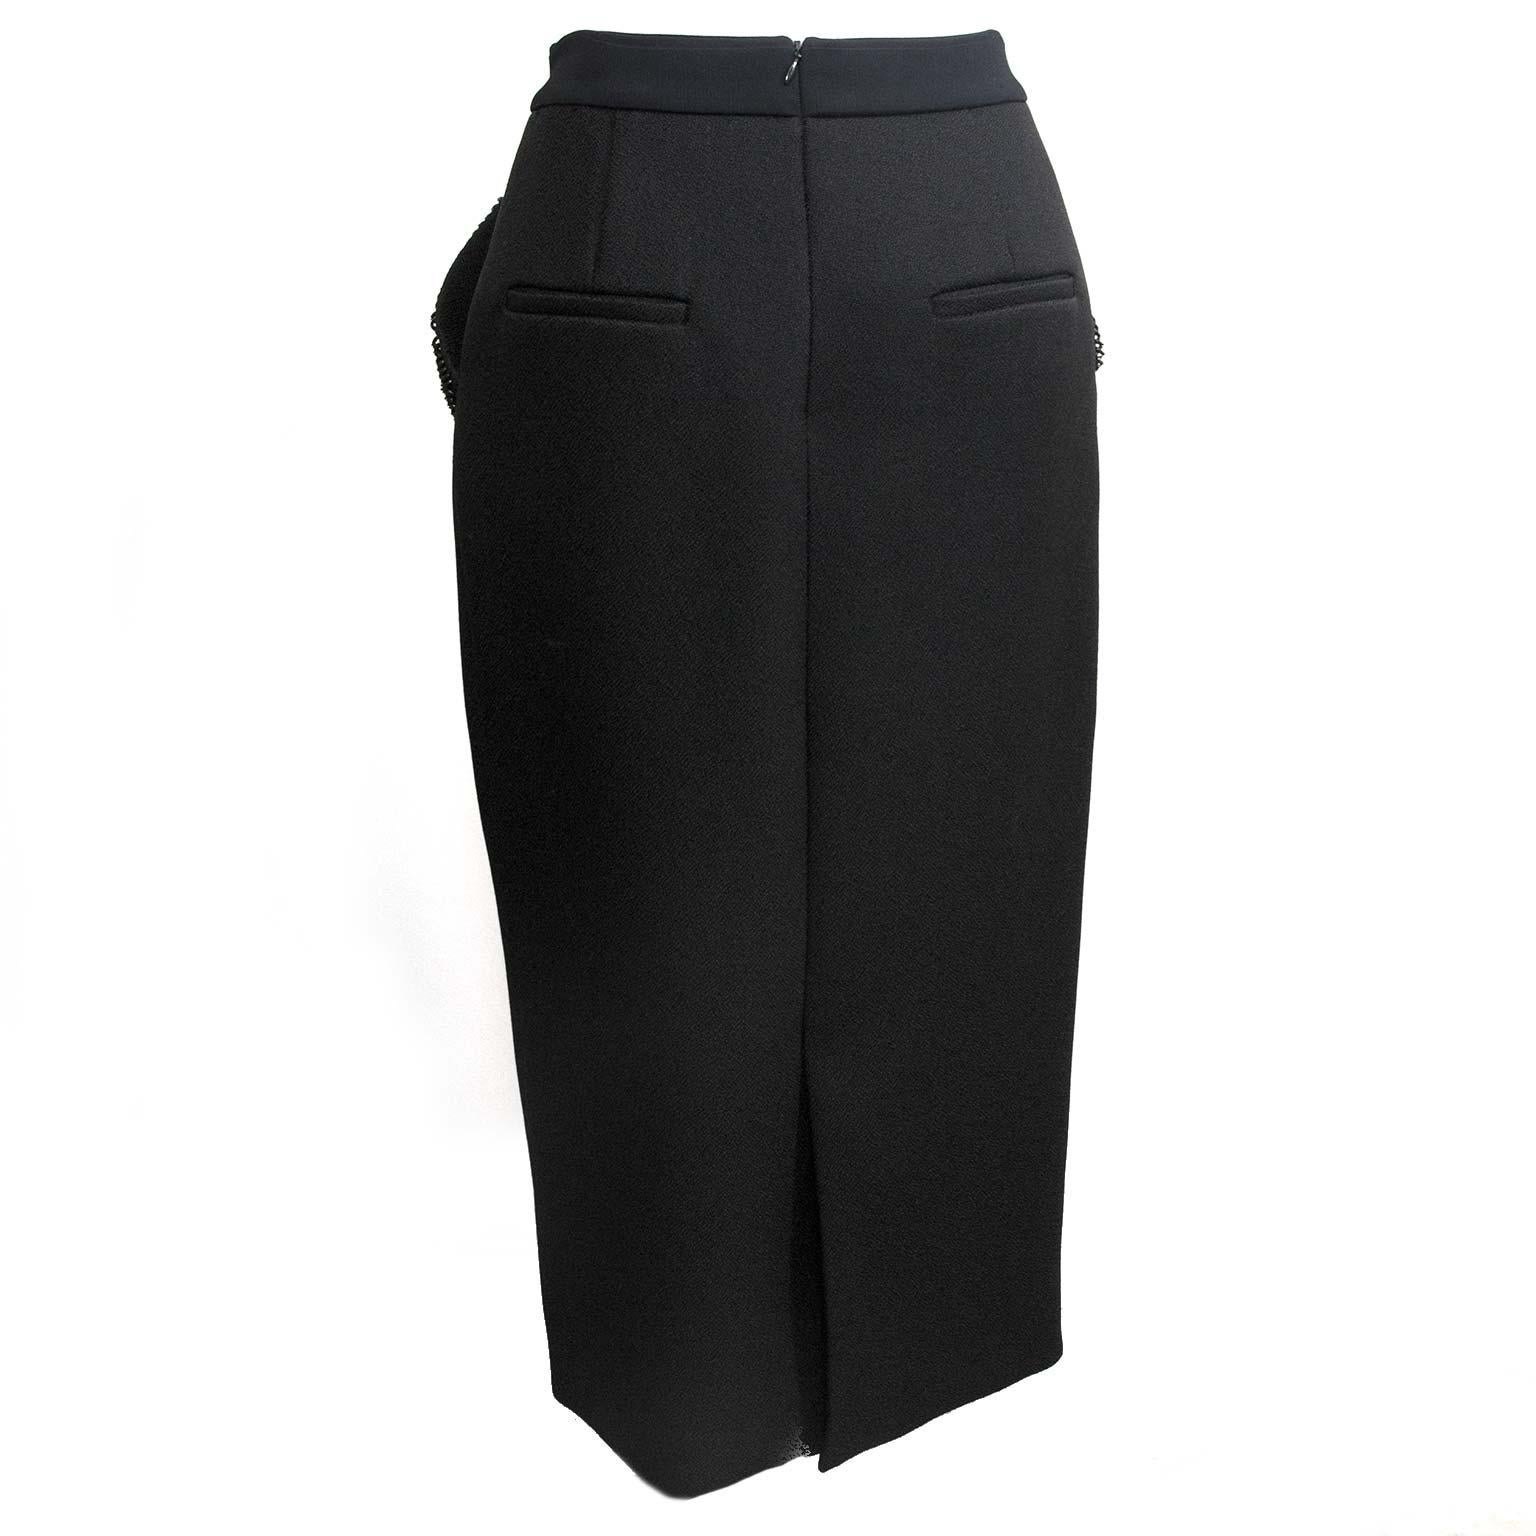 long black pencil skirt